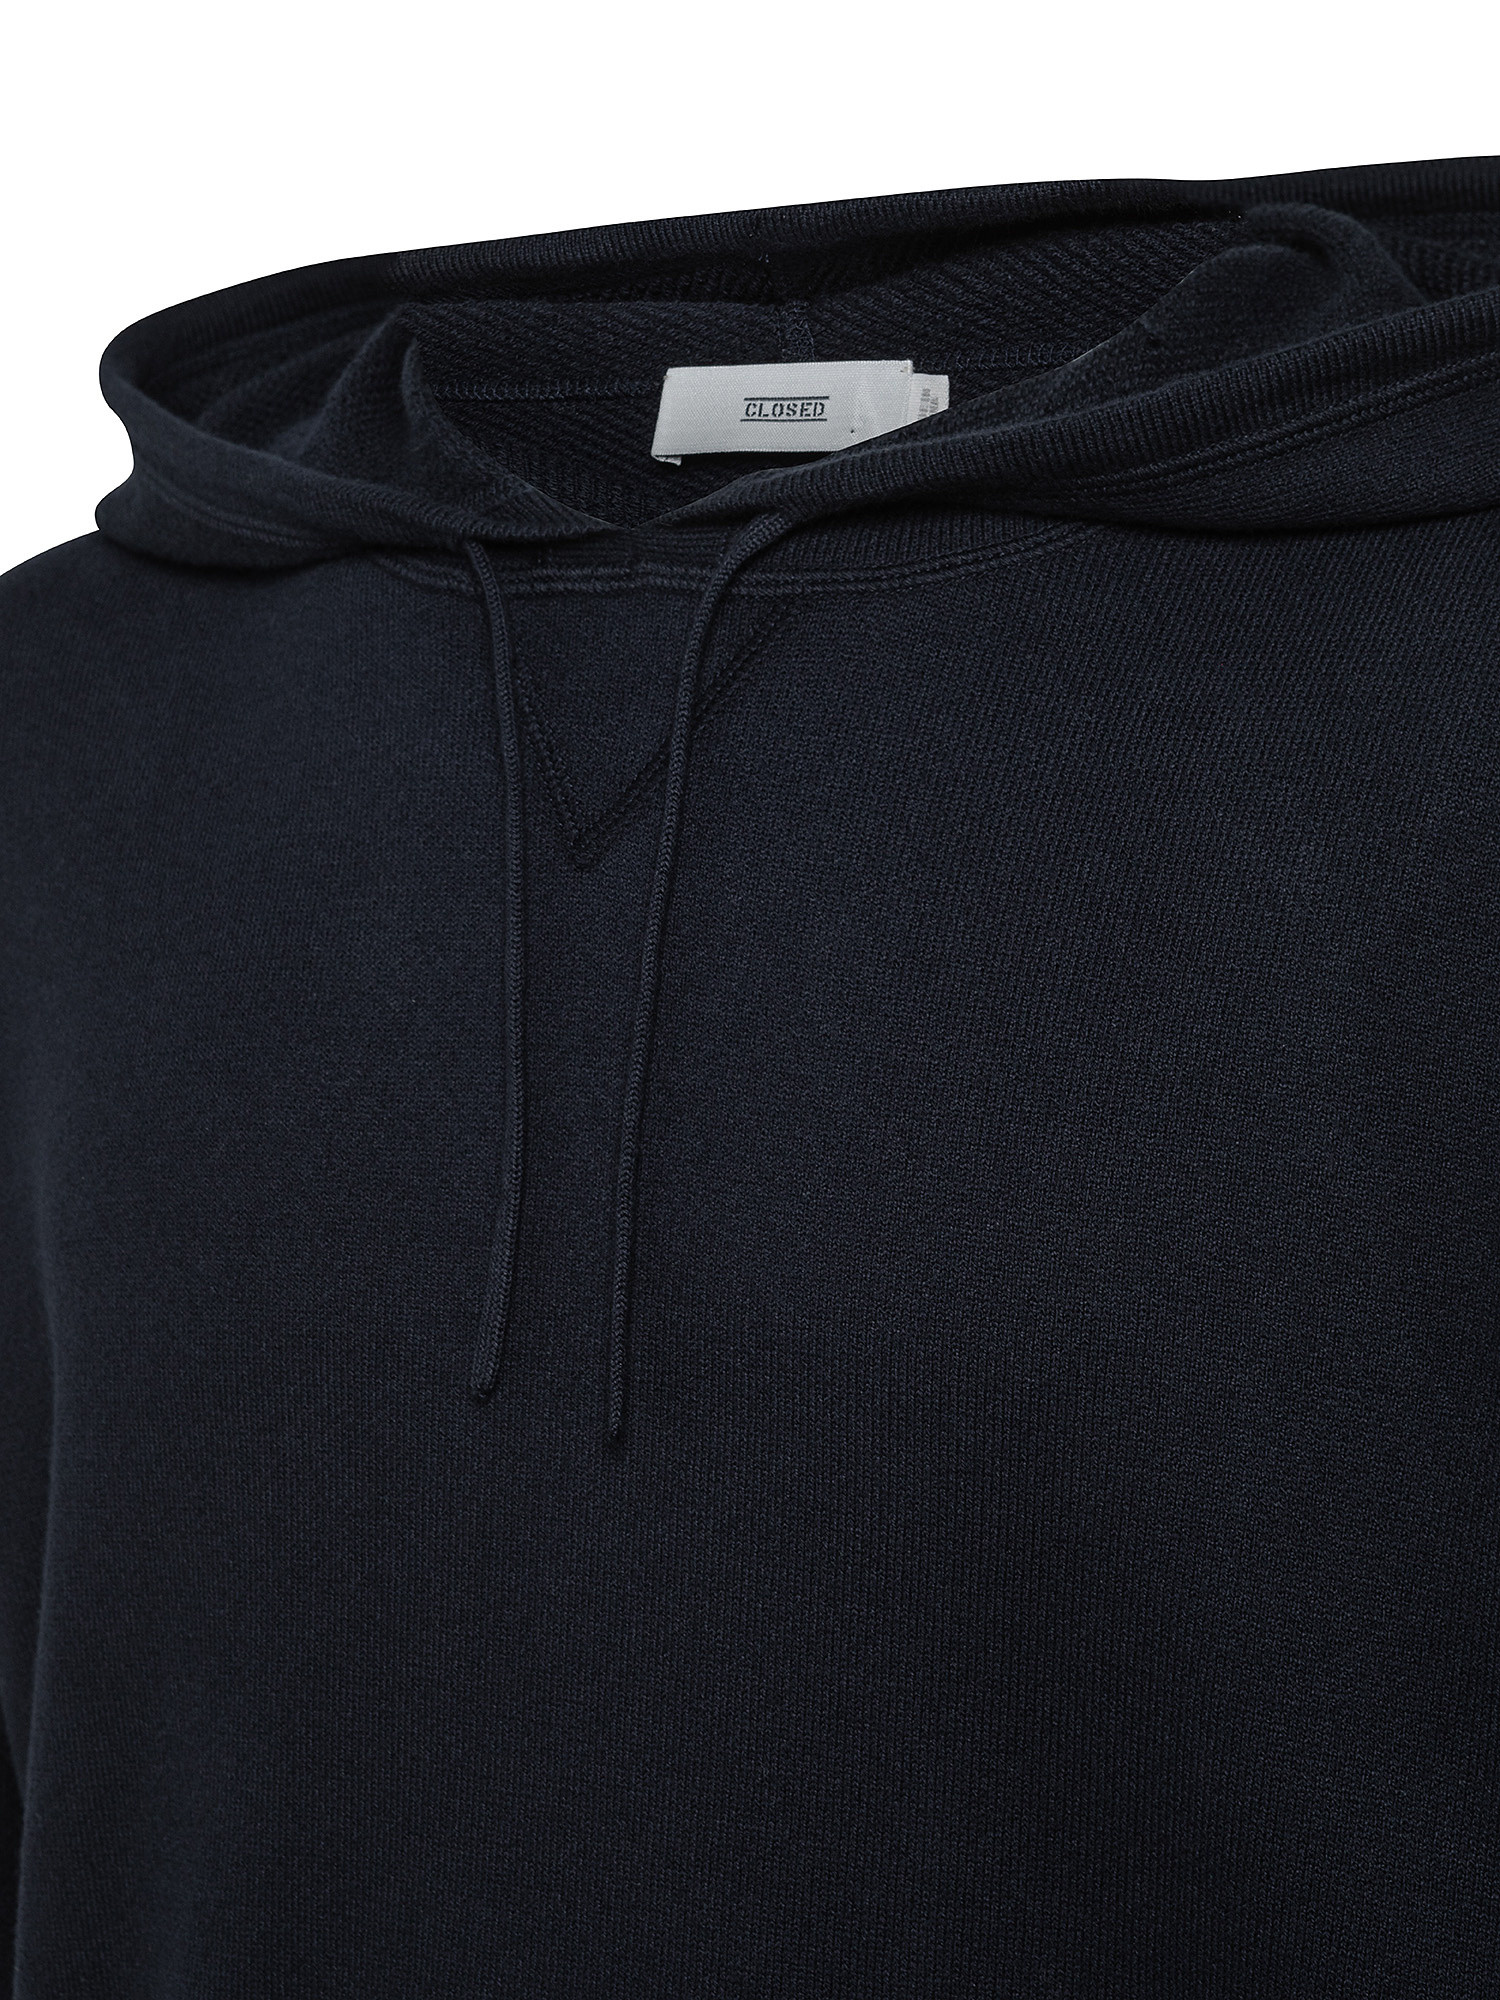 Hooded sweatshirt in cashmere knit, Dark Blue, large image number 2